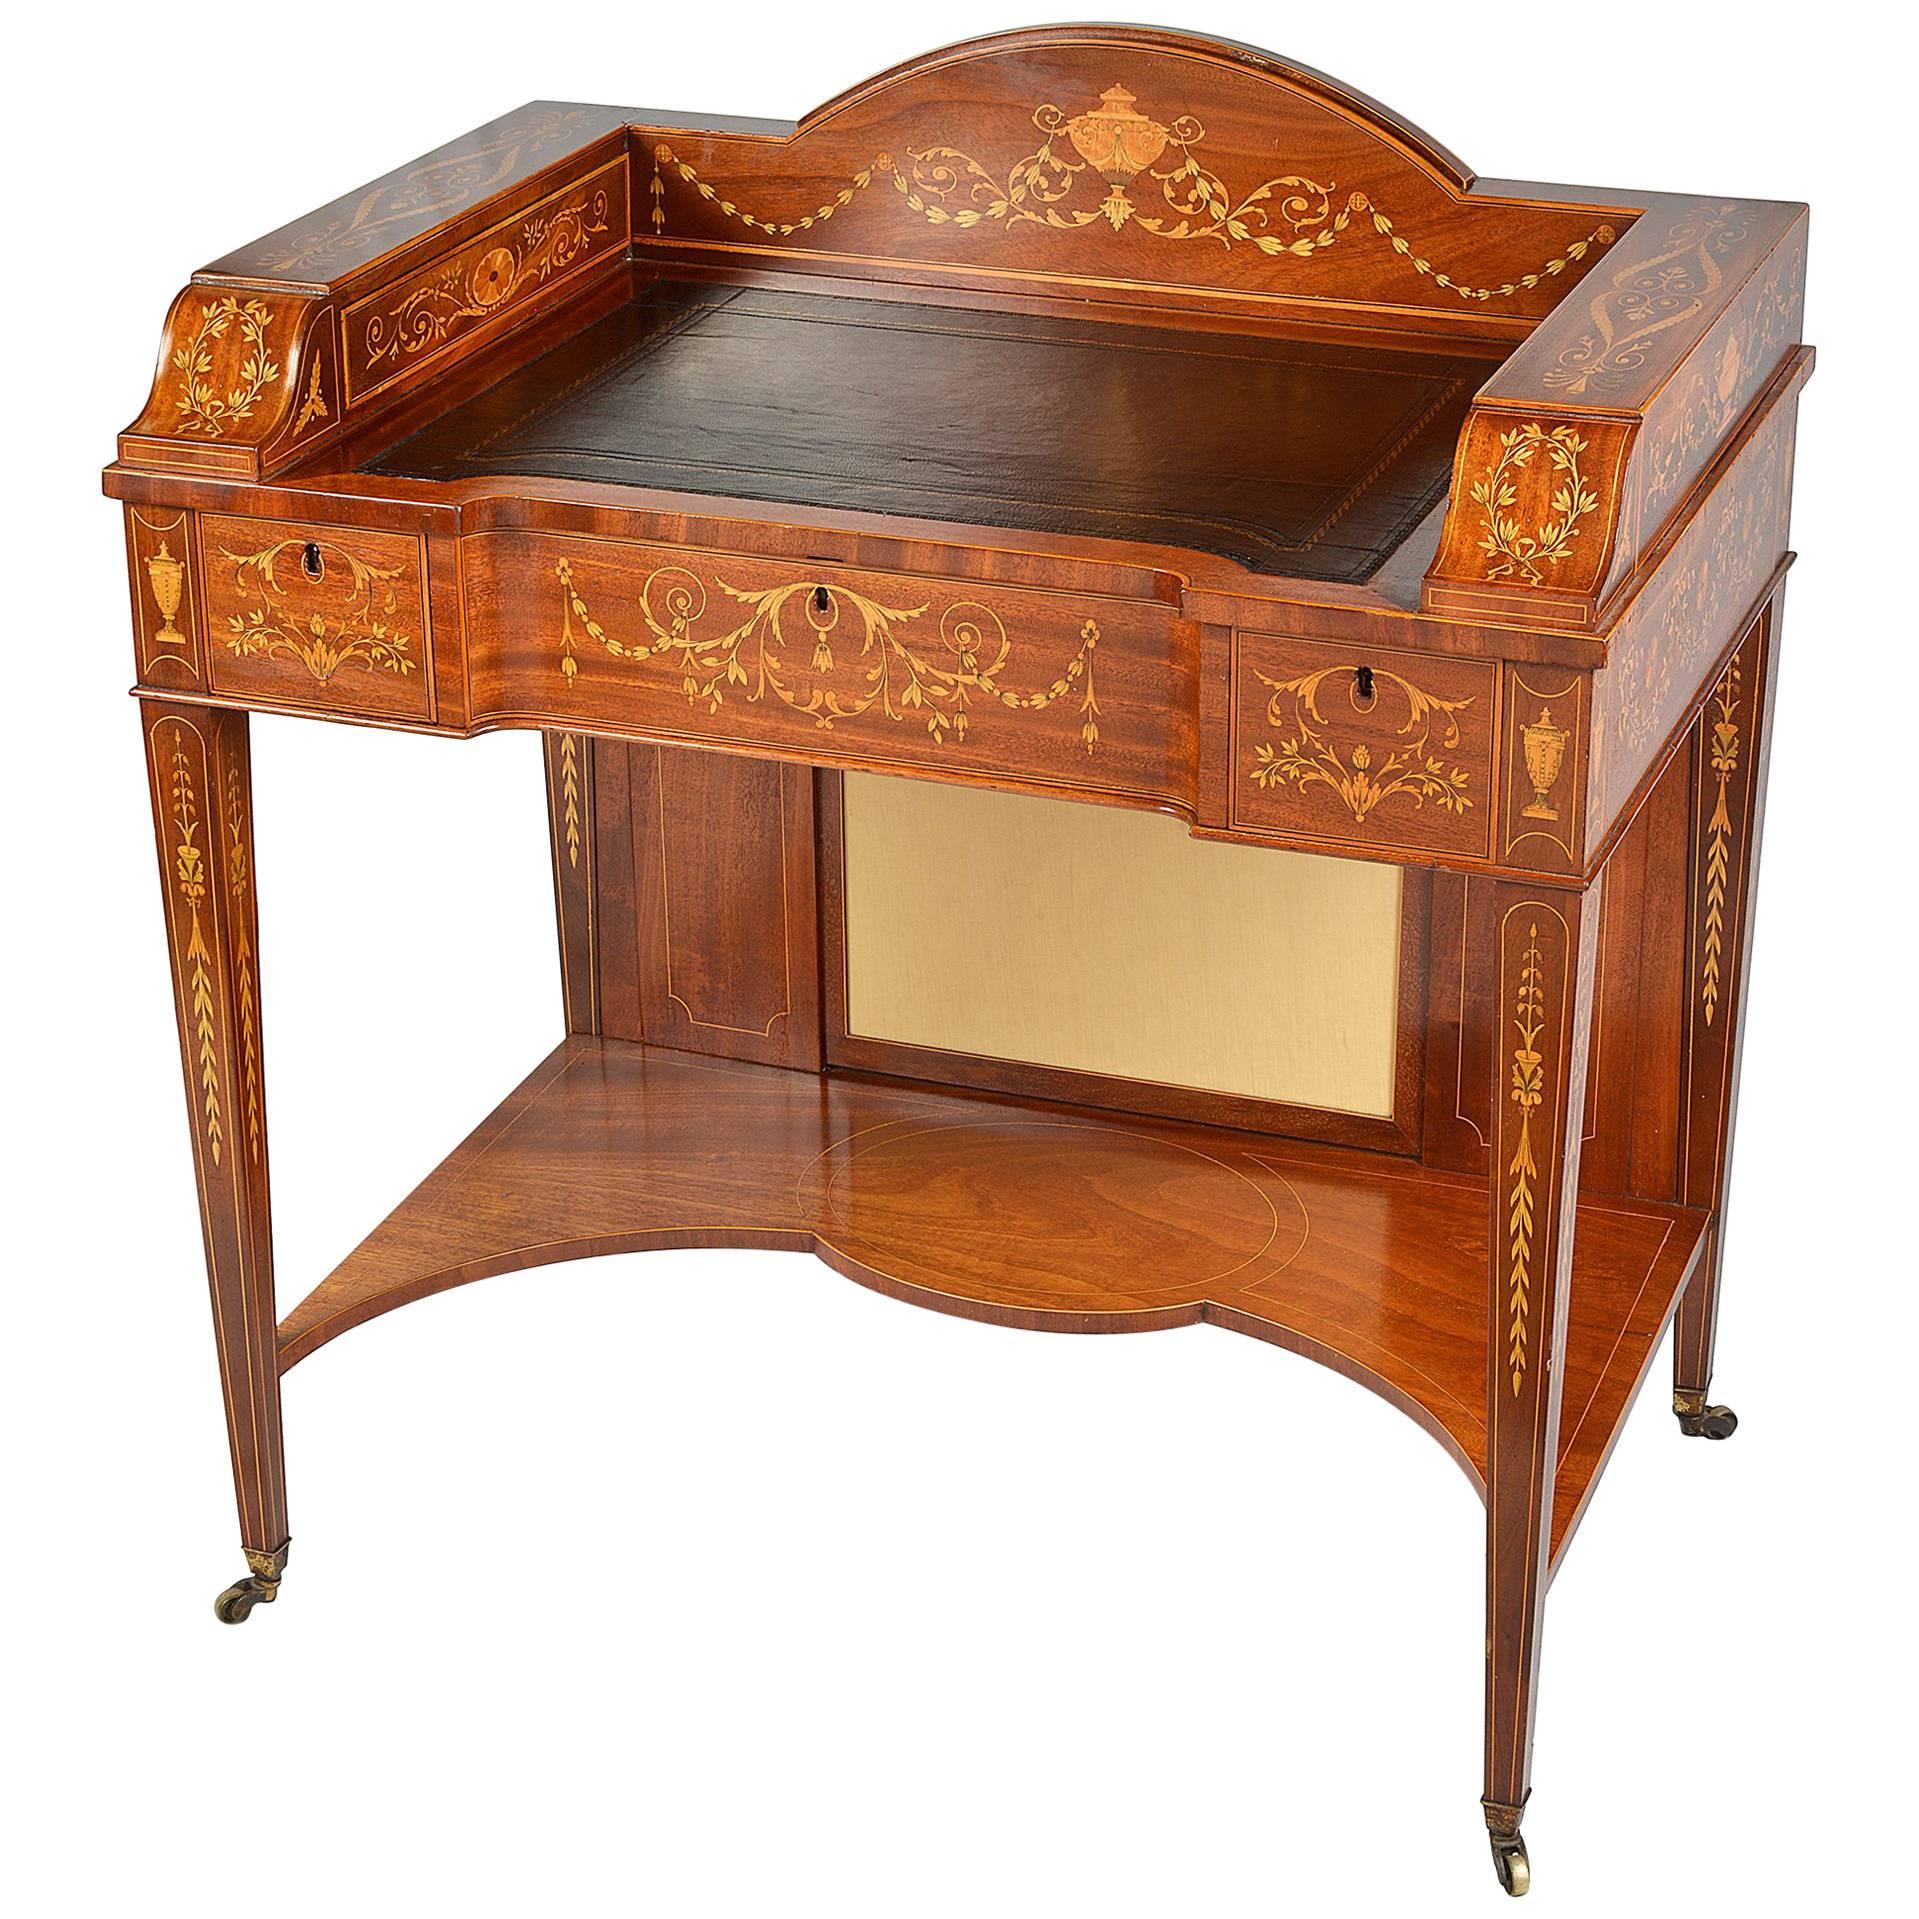 19th Century Sheraton Revival Inlaid Desk For Sale